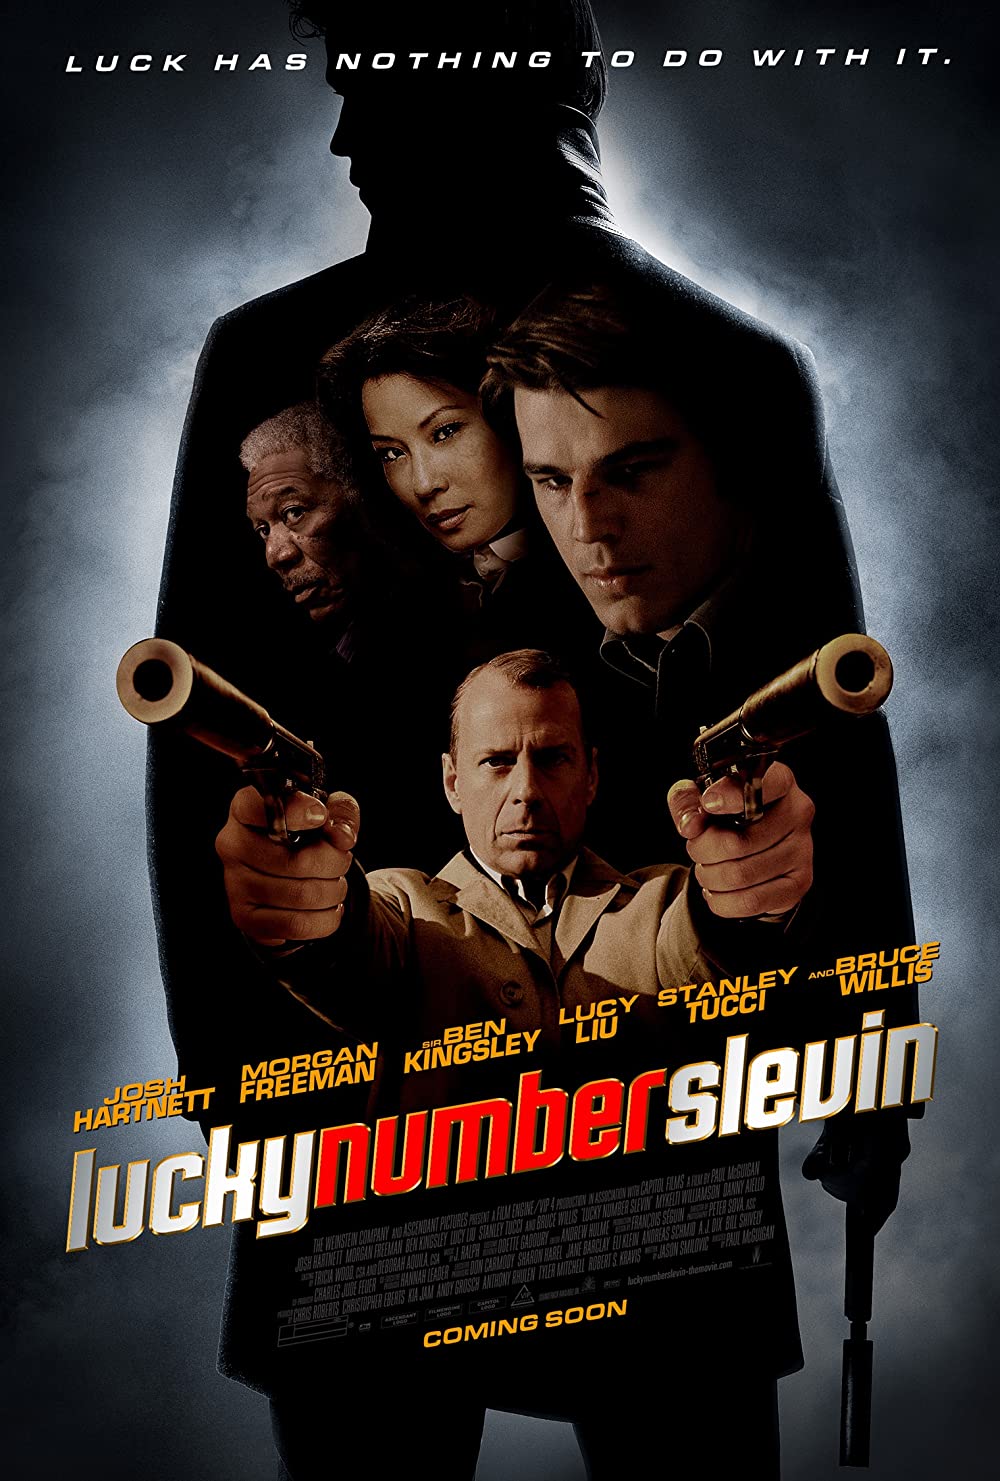 Filmbeschreibung zu Lucky Number Slevin